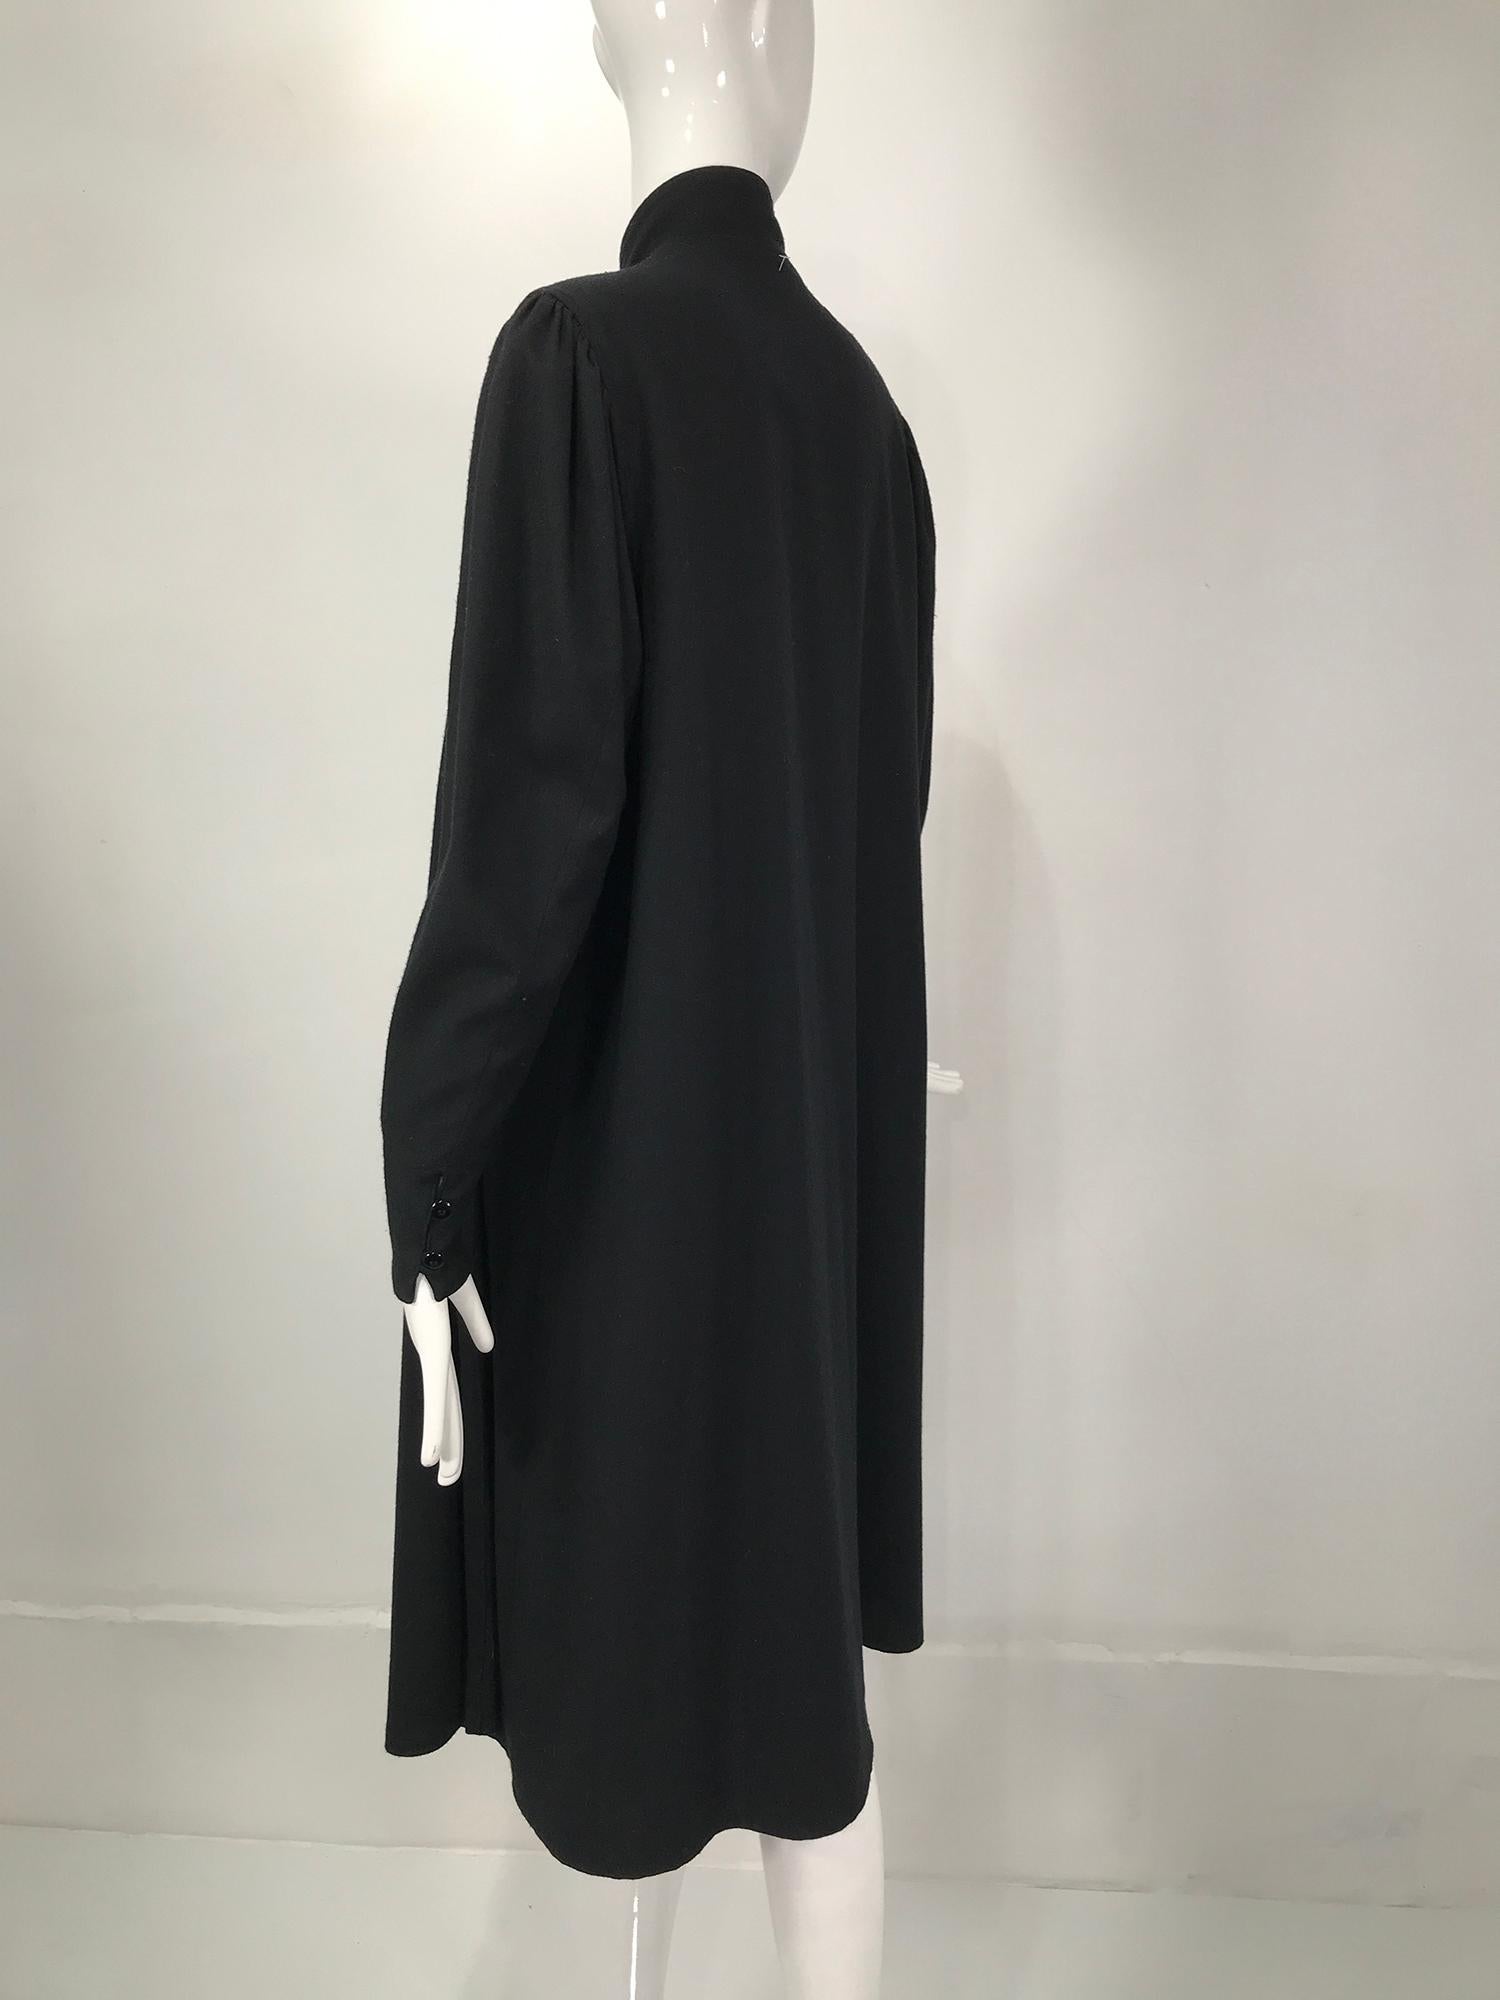 Kenzo Double Face Black Wool Cheongsam Style Coat 1980s For Sale 1